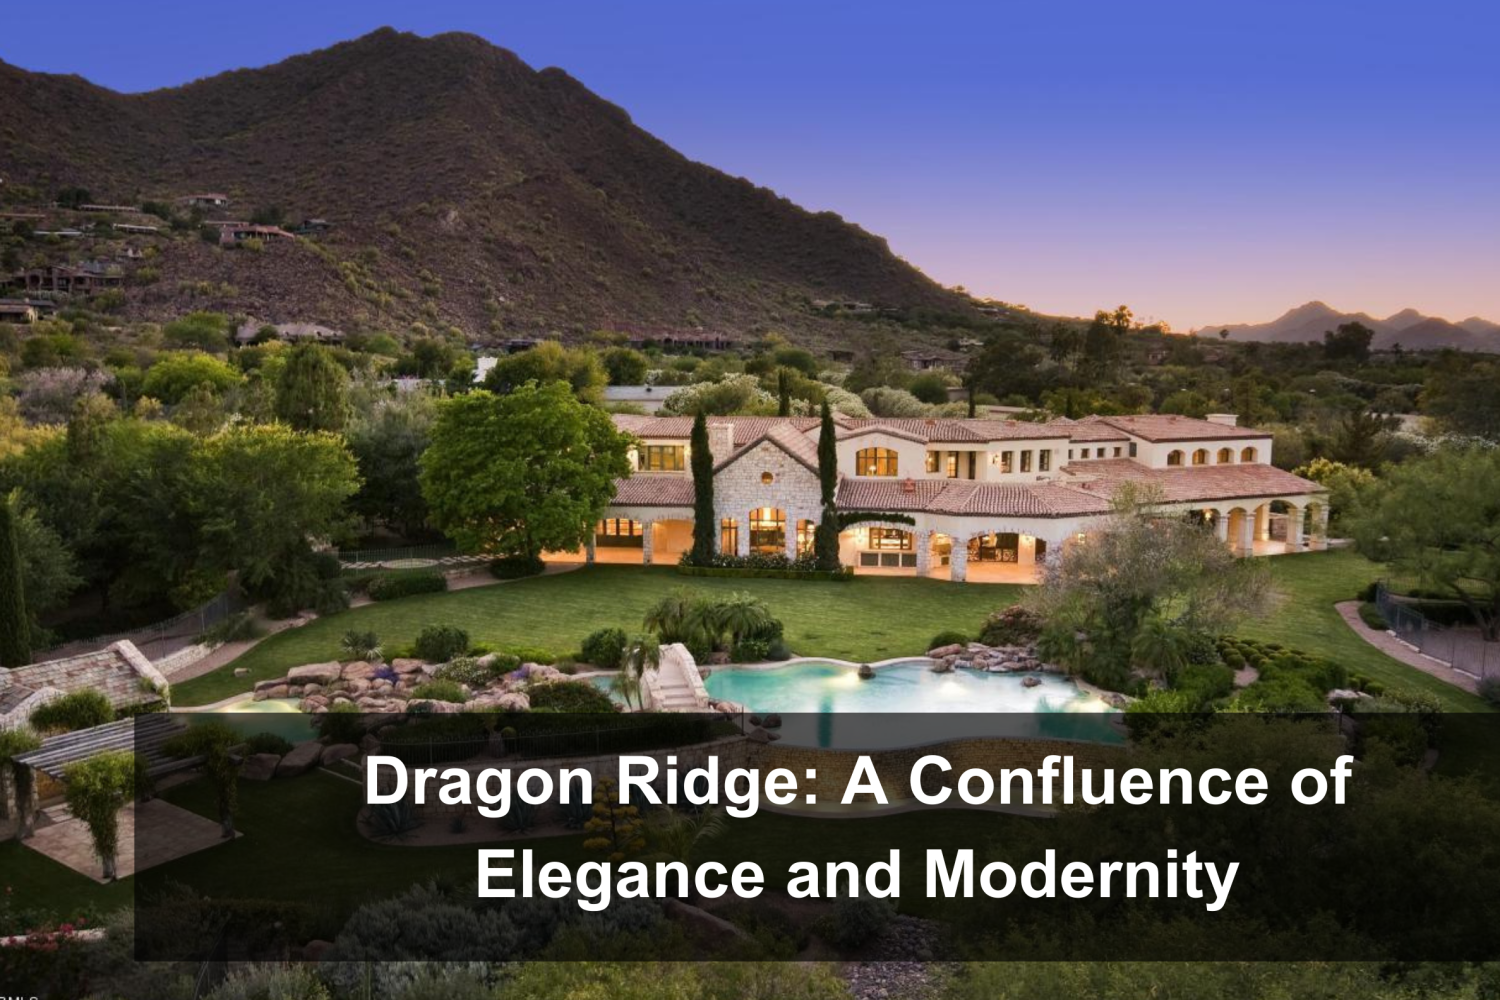 Dragon Ridge: A Confluence of Elegance and Modernity